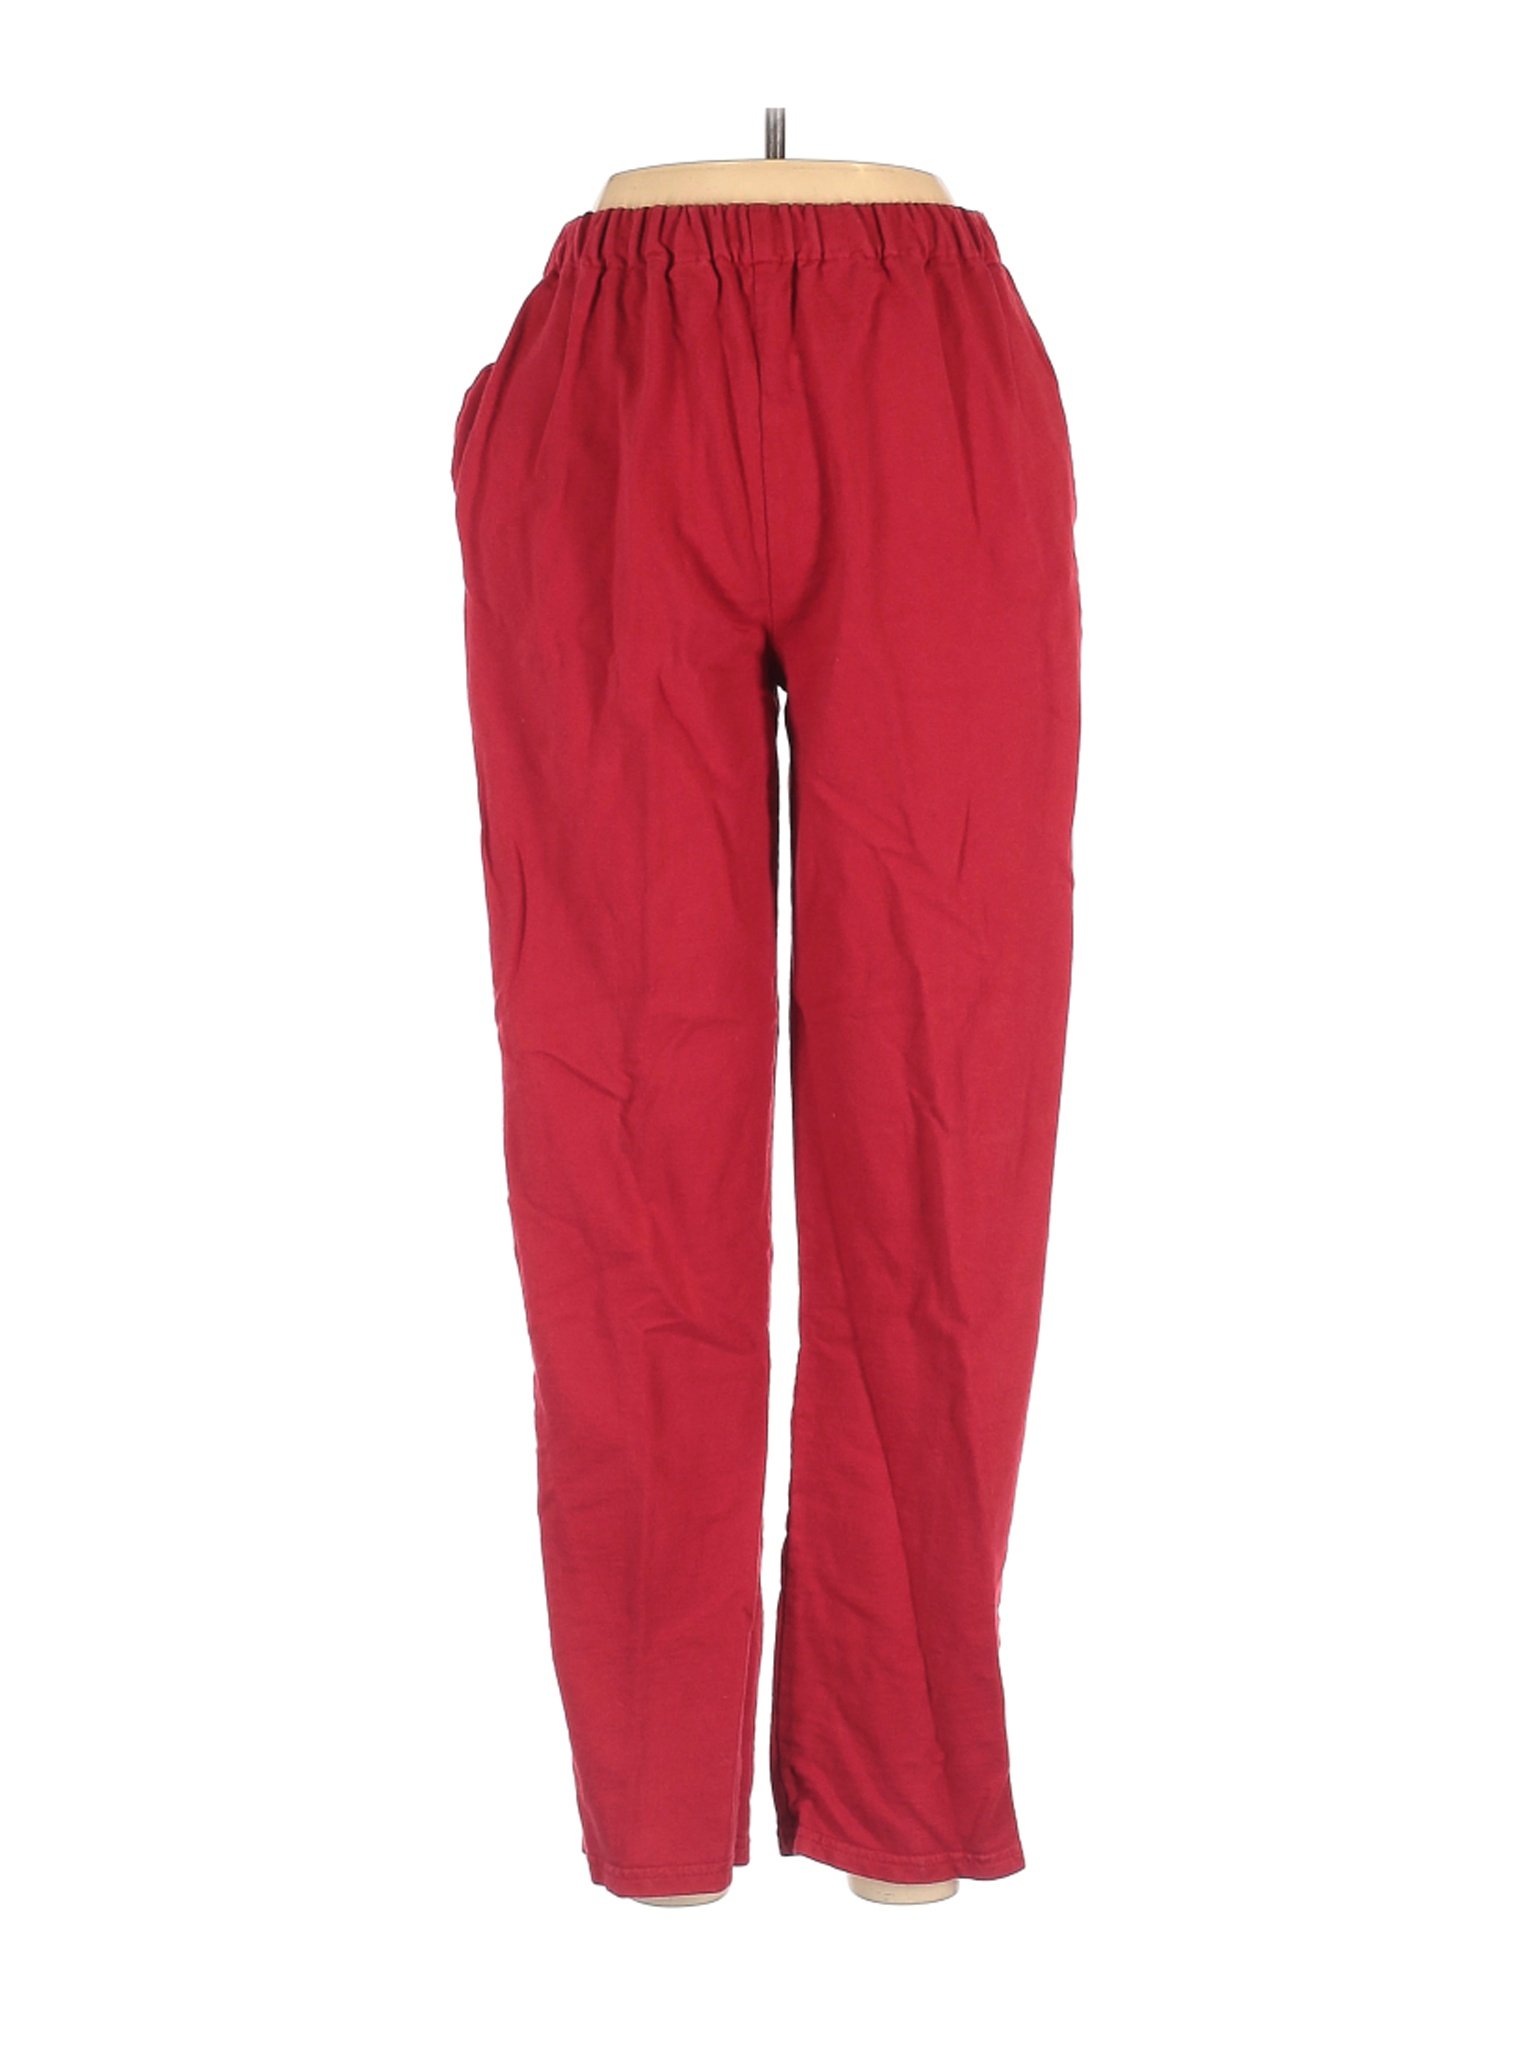 Unbranded Women Red Sweatpants M | eBay